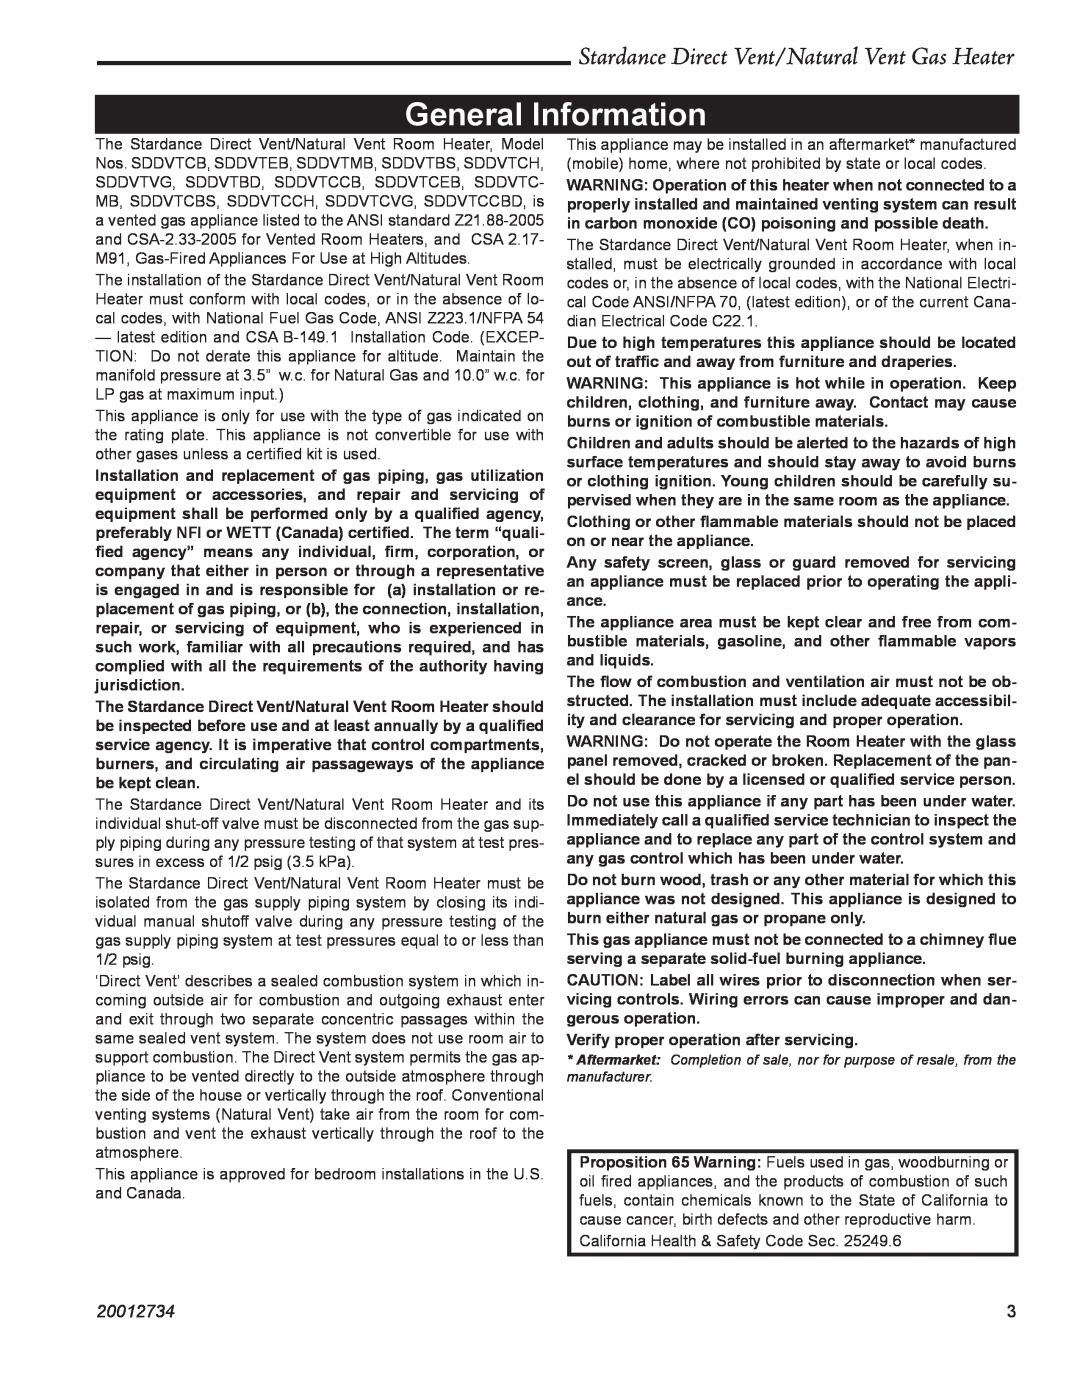 Vermont Casting SDDVT manual General Information, Stardance Direct Vent/Natural Vent Gas Heater, 20012734 